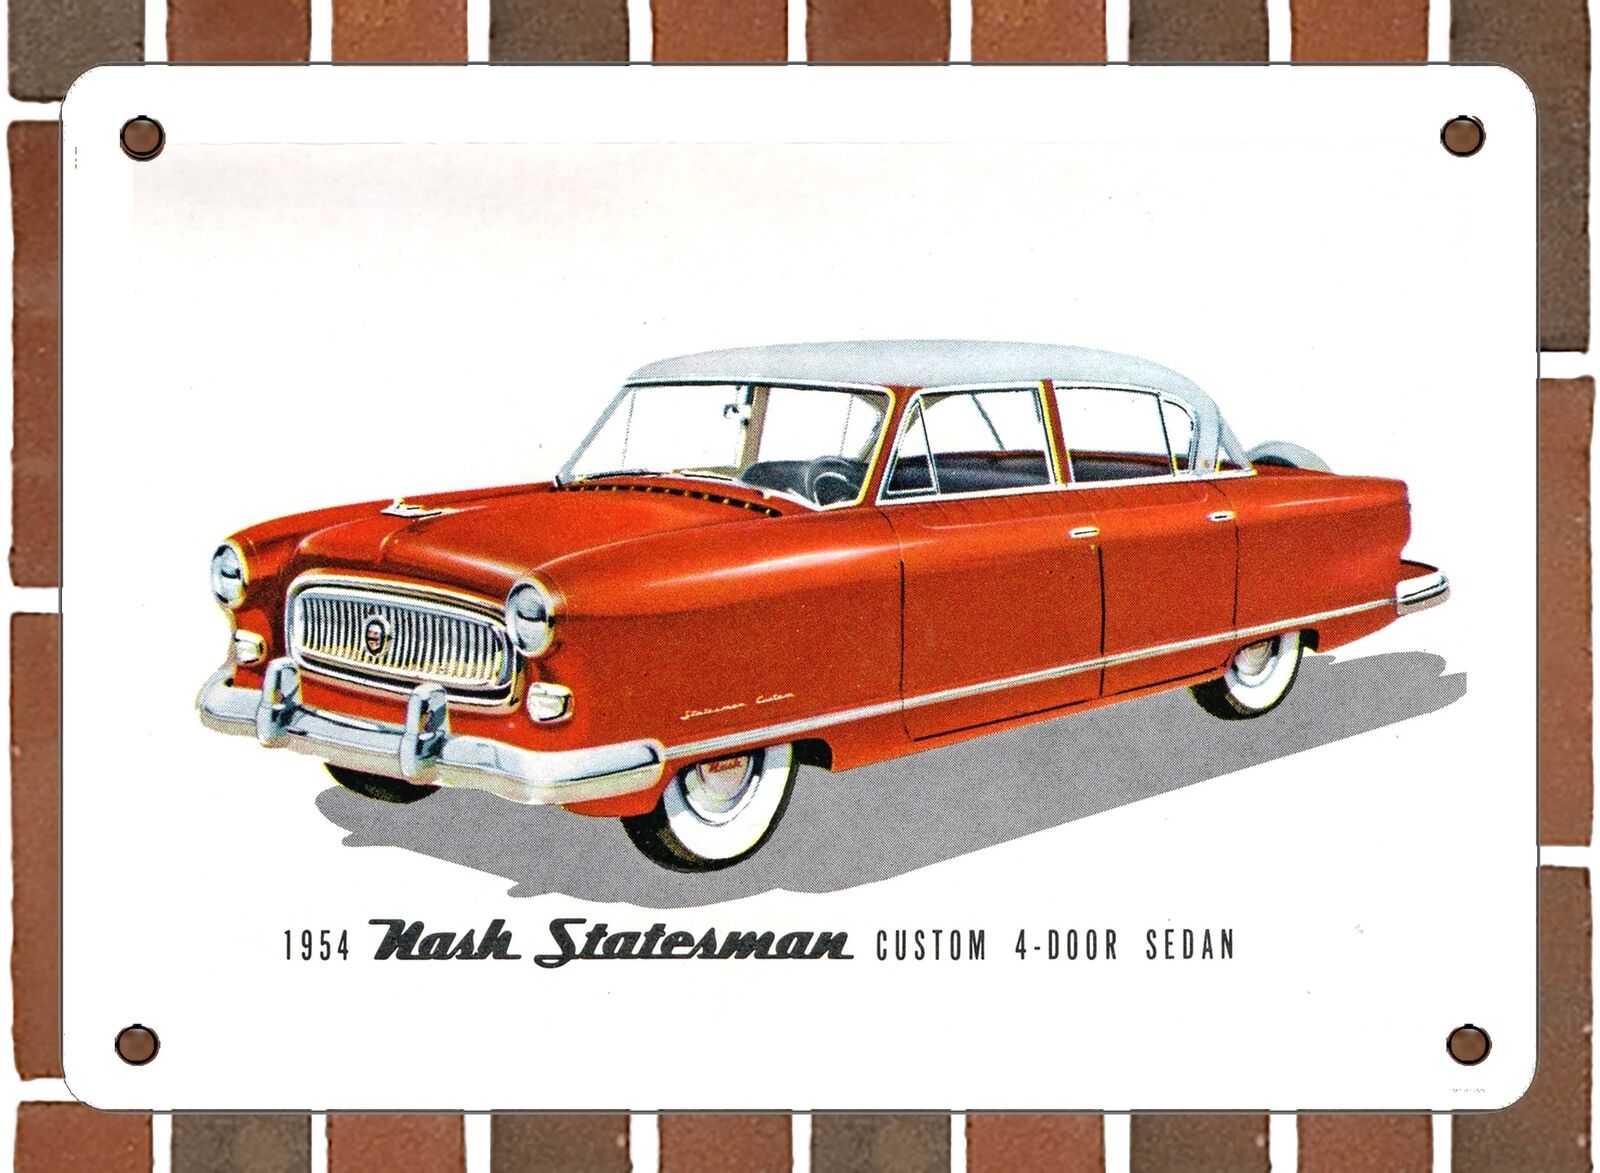 METAL SIGN - 1954 Nash Statesman Custom 4 Door Sedan - 10x14 Inches